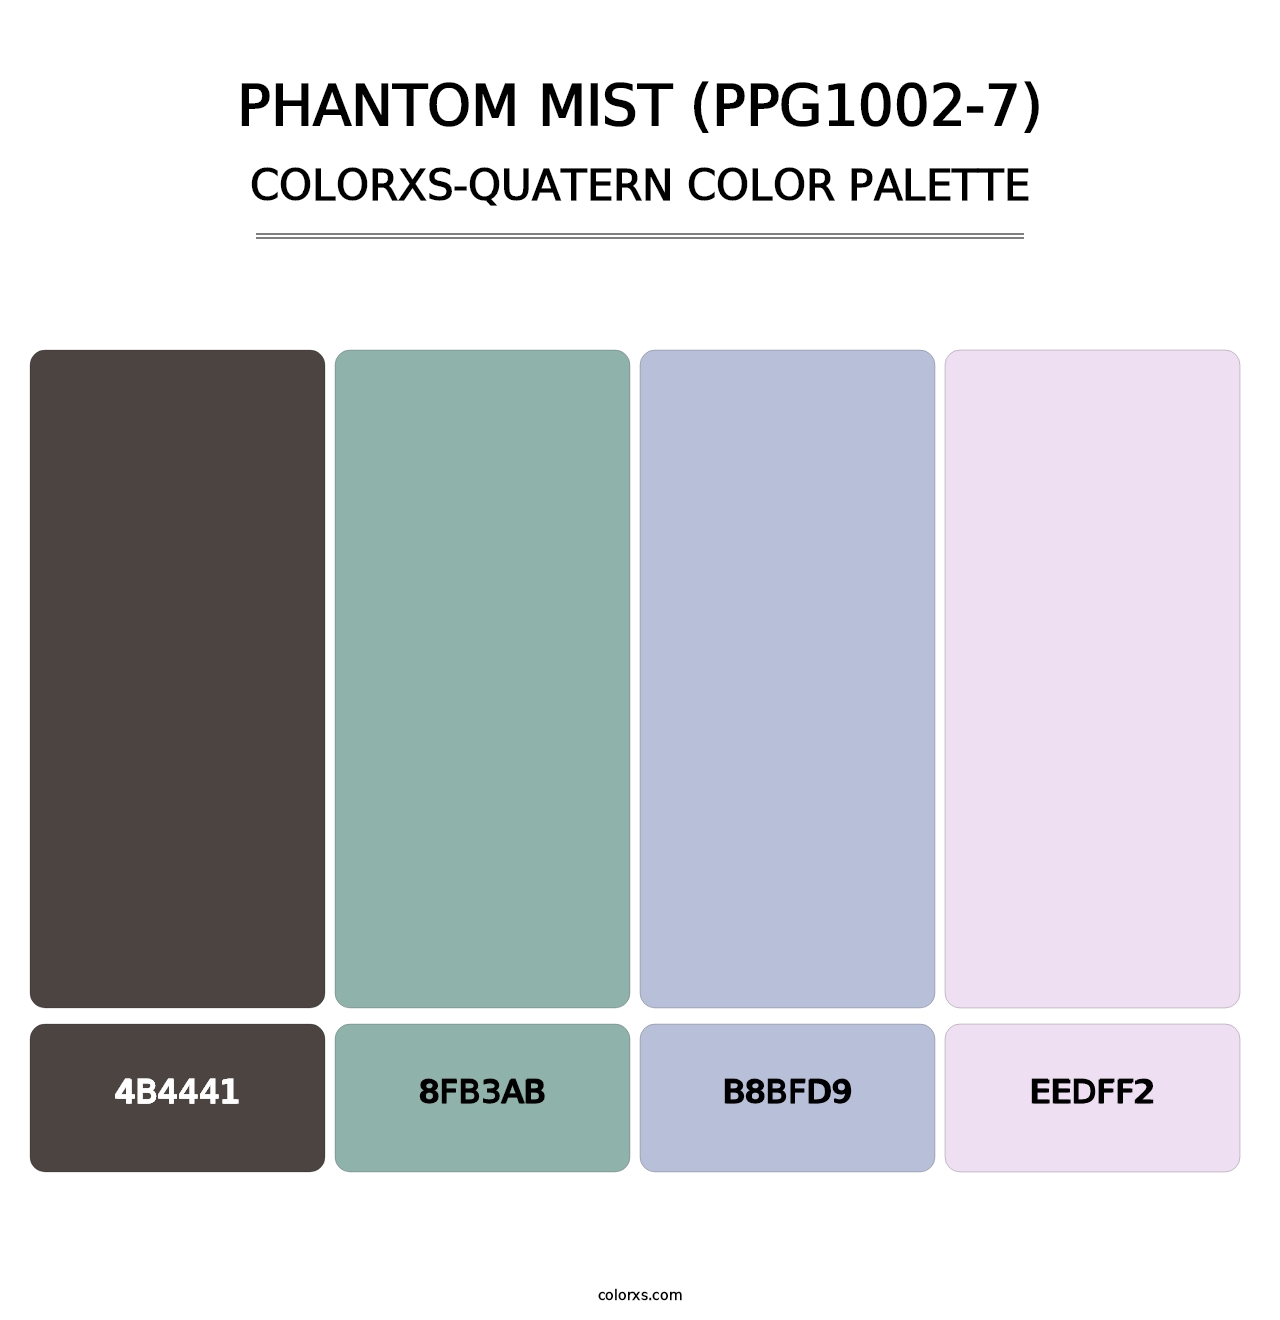 Phantom Mist (PPG1002-7) - Colorxs Quatern Palette